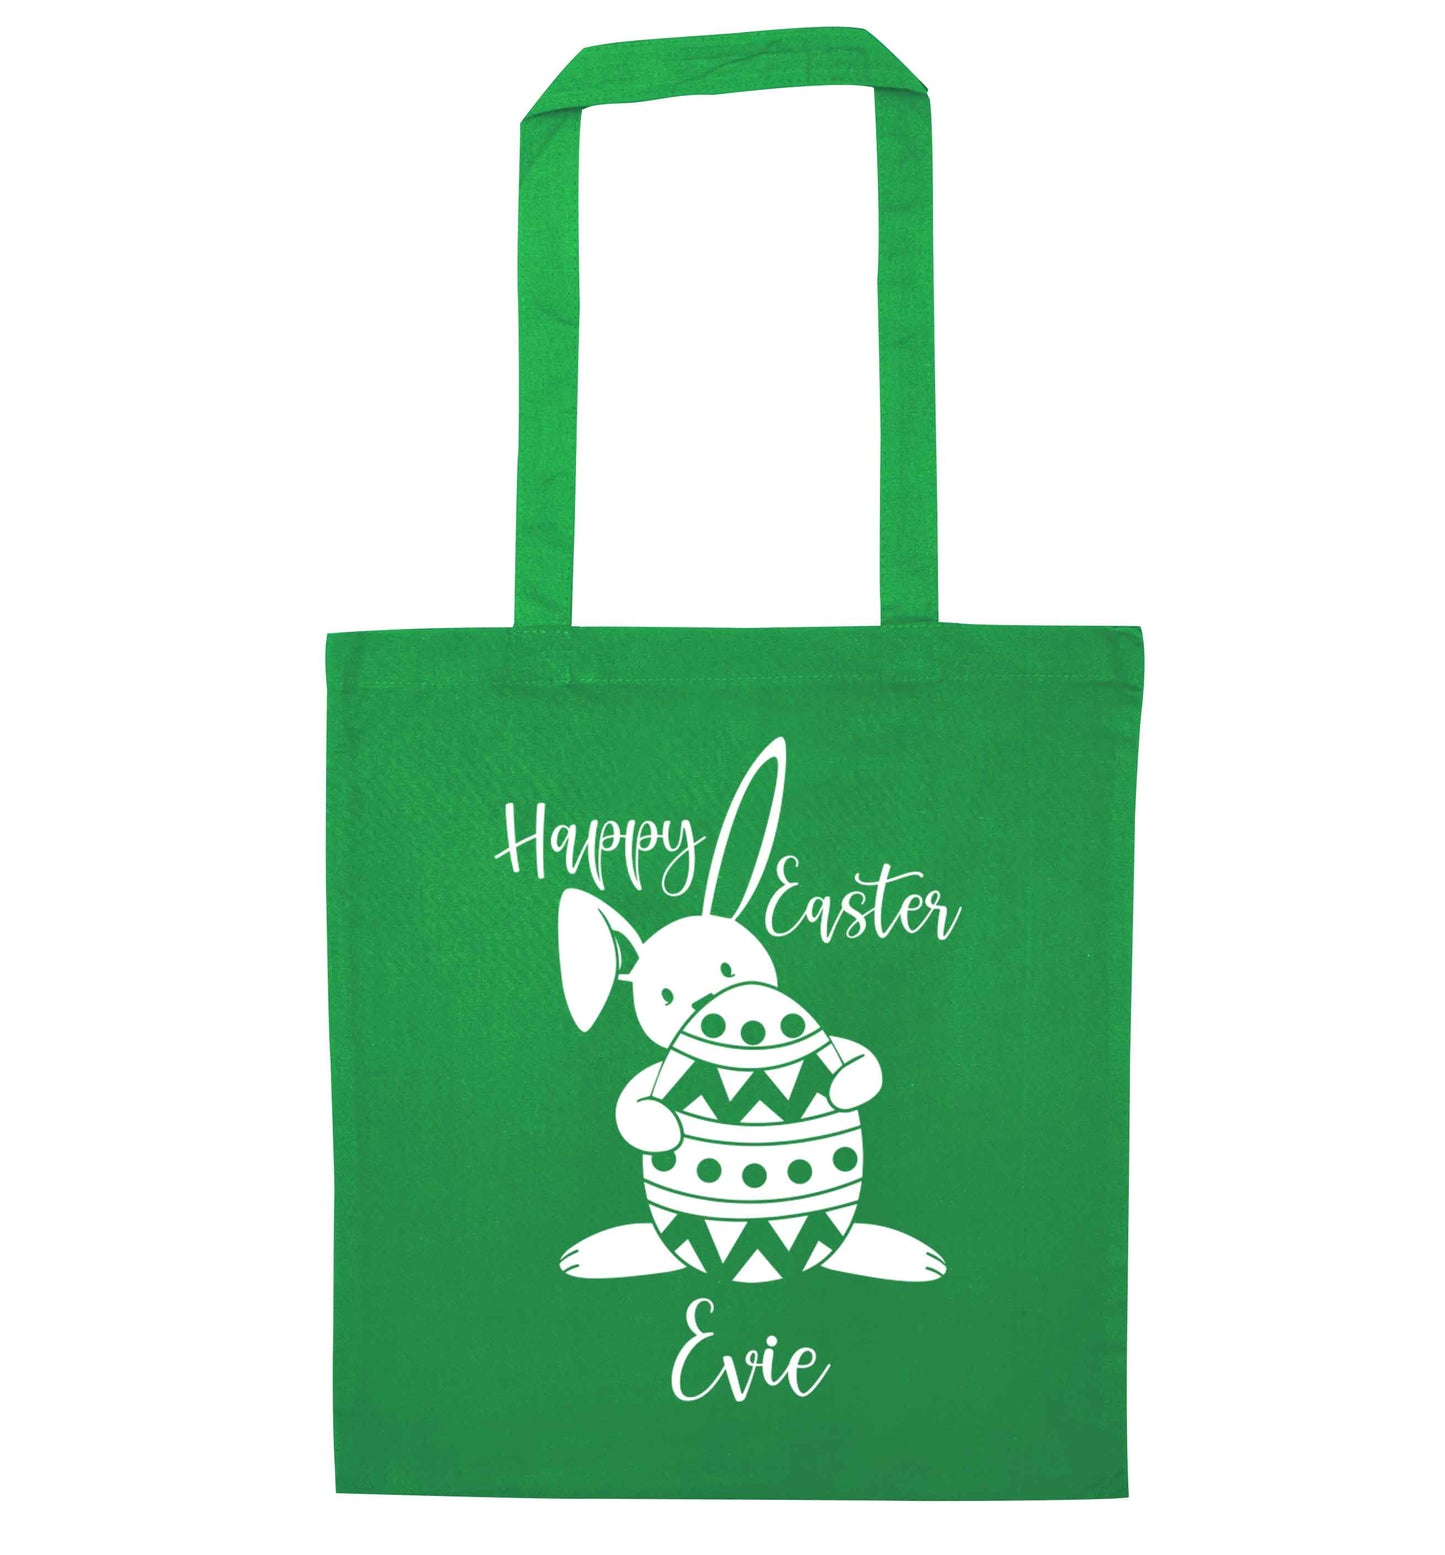 Happy Easter - personalised green tote bag